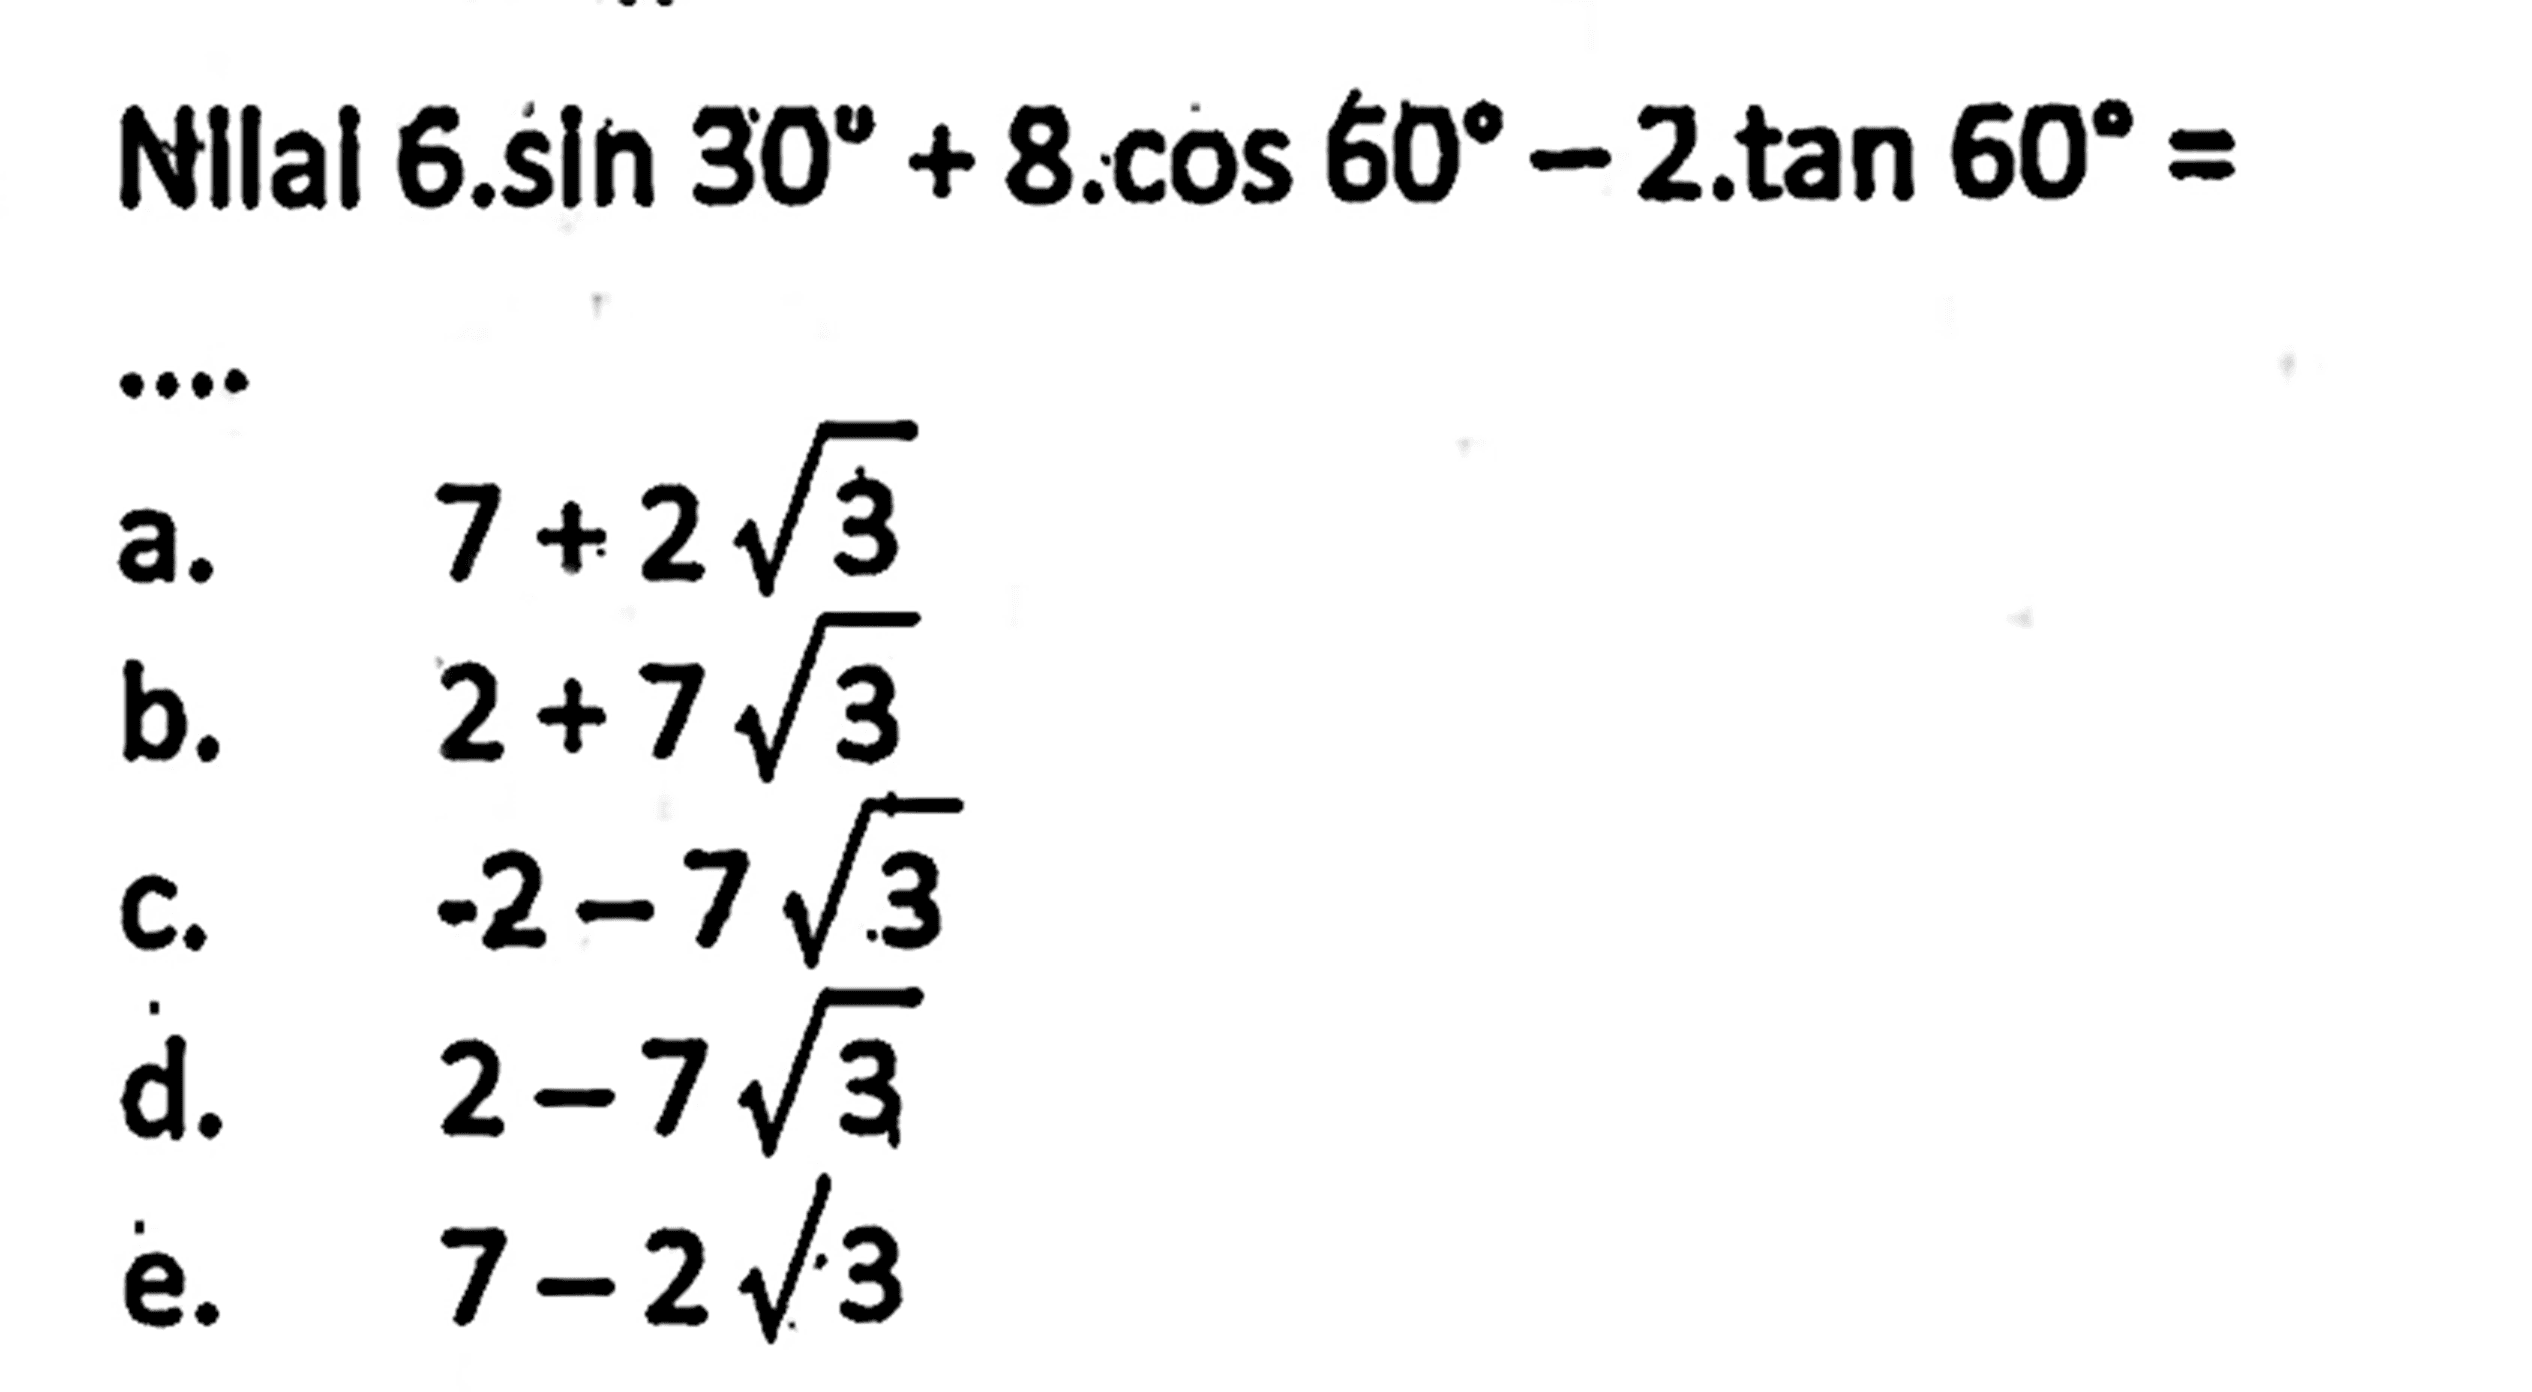 Nilal  6.sin30 + 8.cos60 - 2.tan60= 